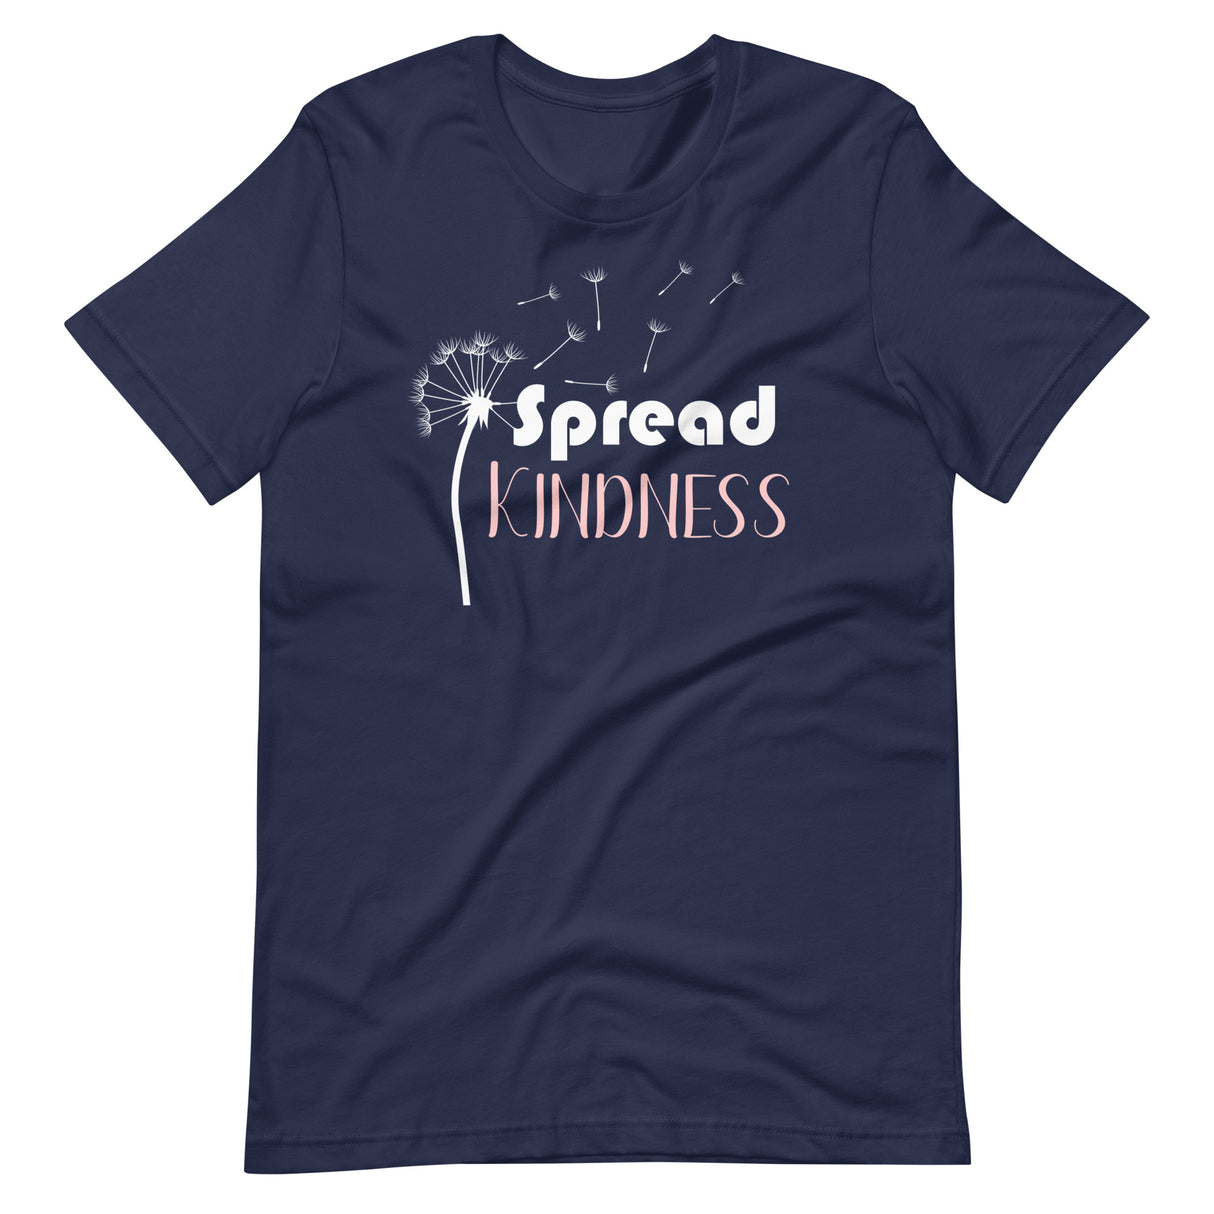 Spread Kindness Shirt